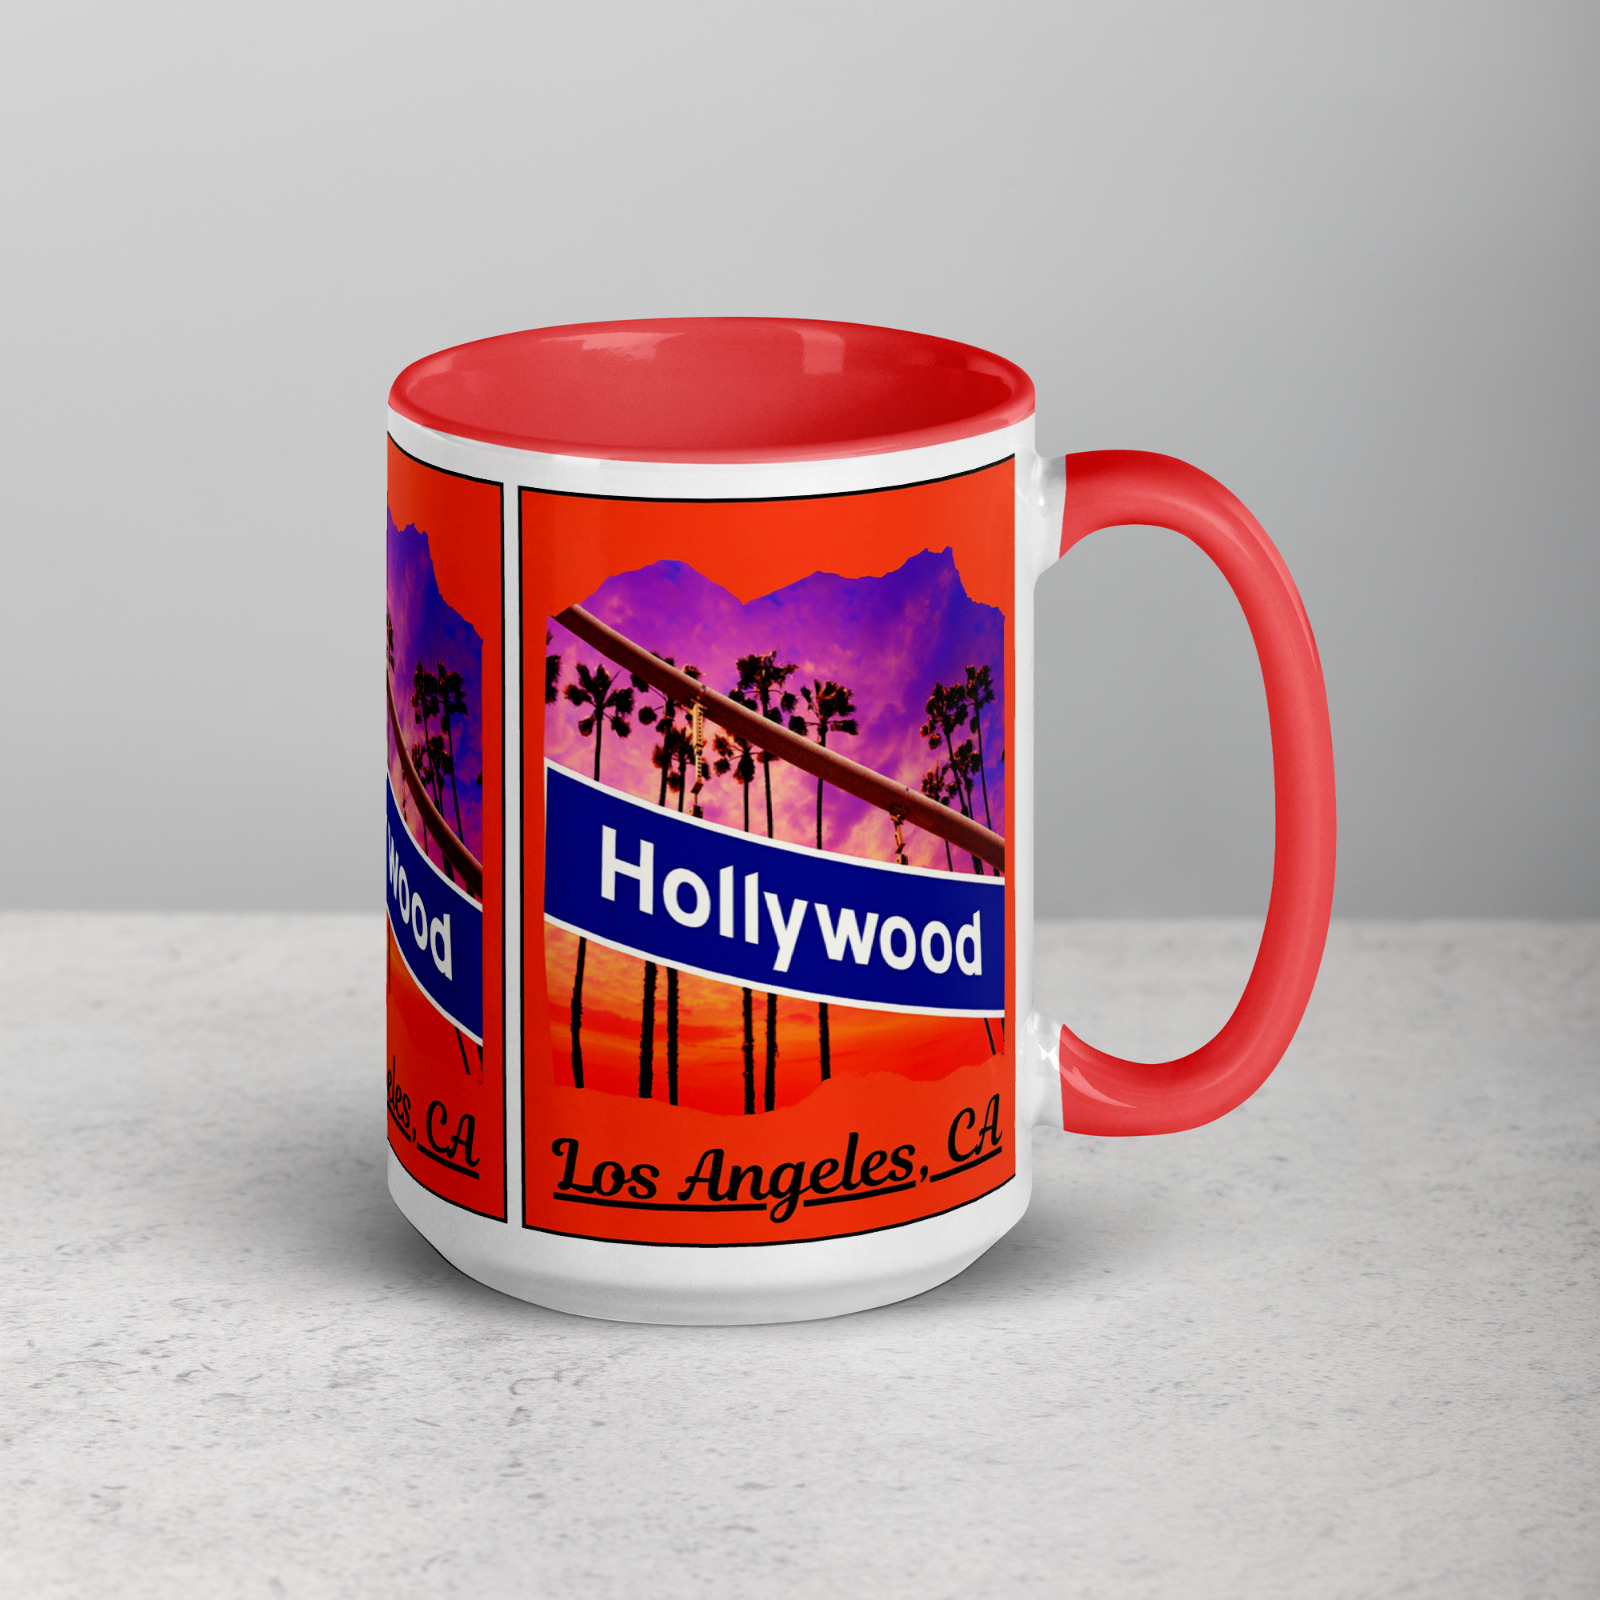 Hollywood Los Angeles Coffee Mug 15oz California FAN ART red handle & interior